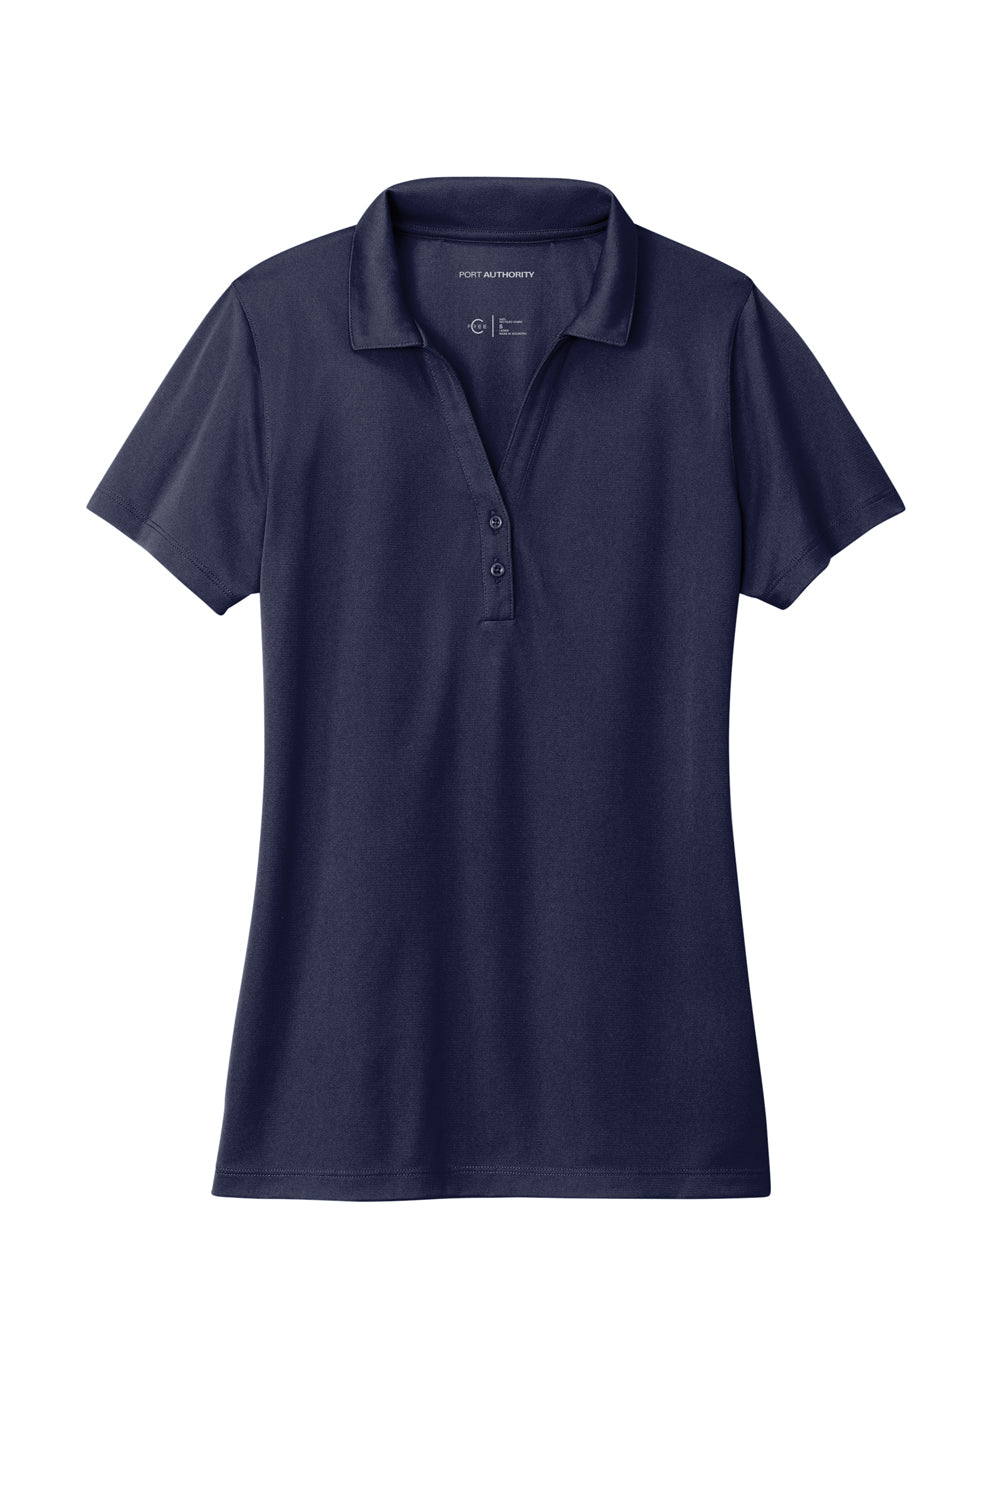 Port Authority LK863 C-Free Performance Short Sleeve Polo Shirt True Navy Blue Flat Front